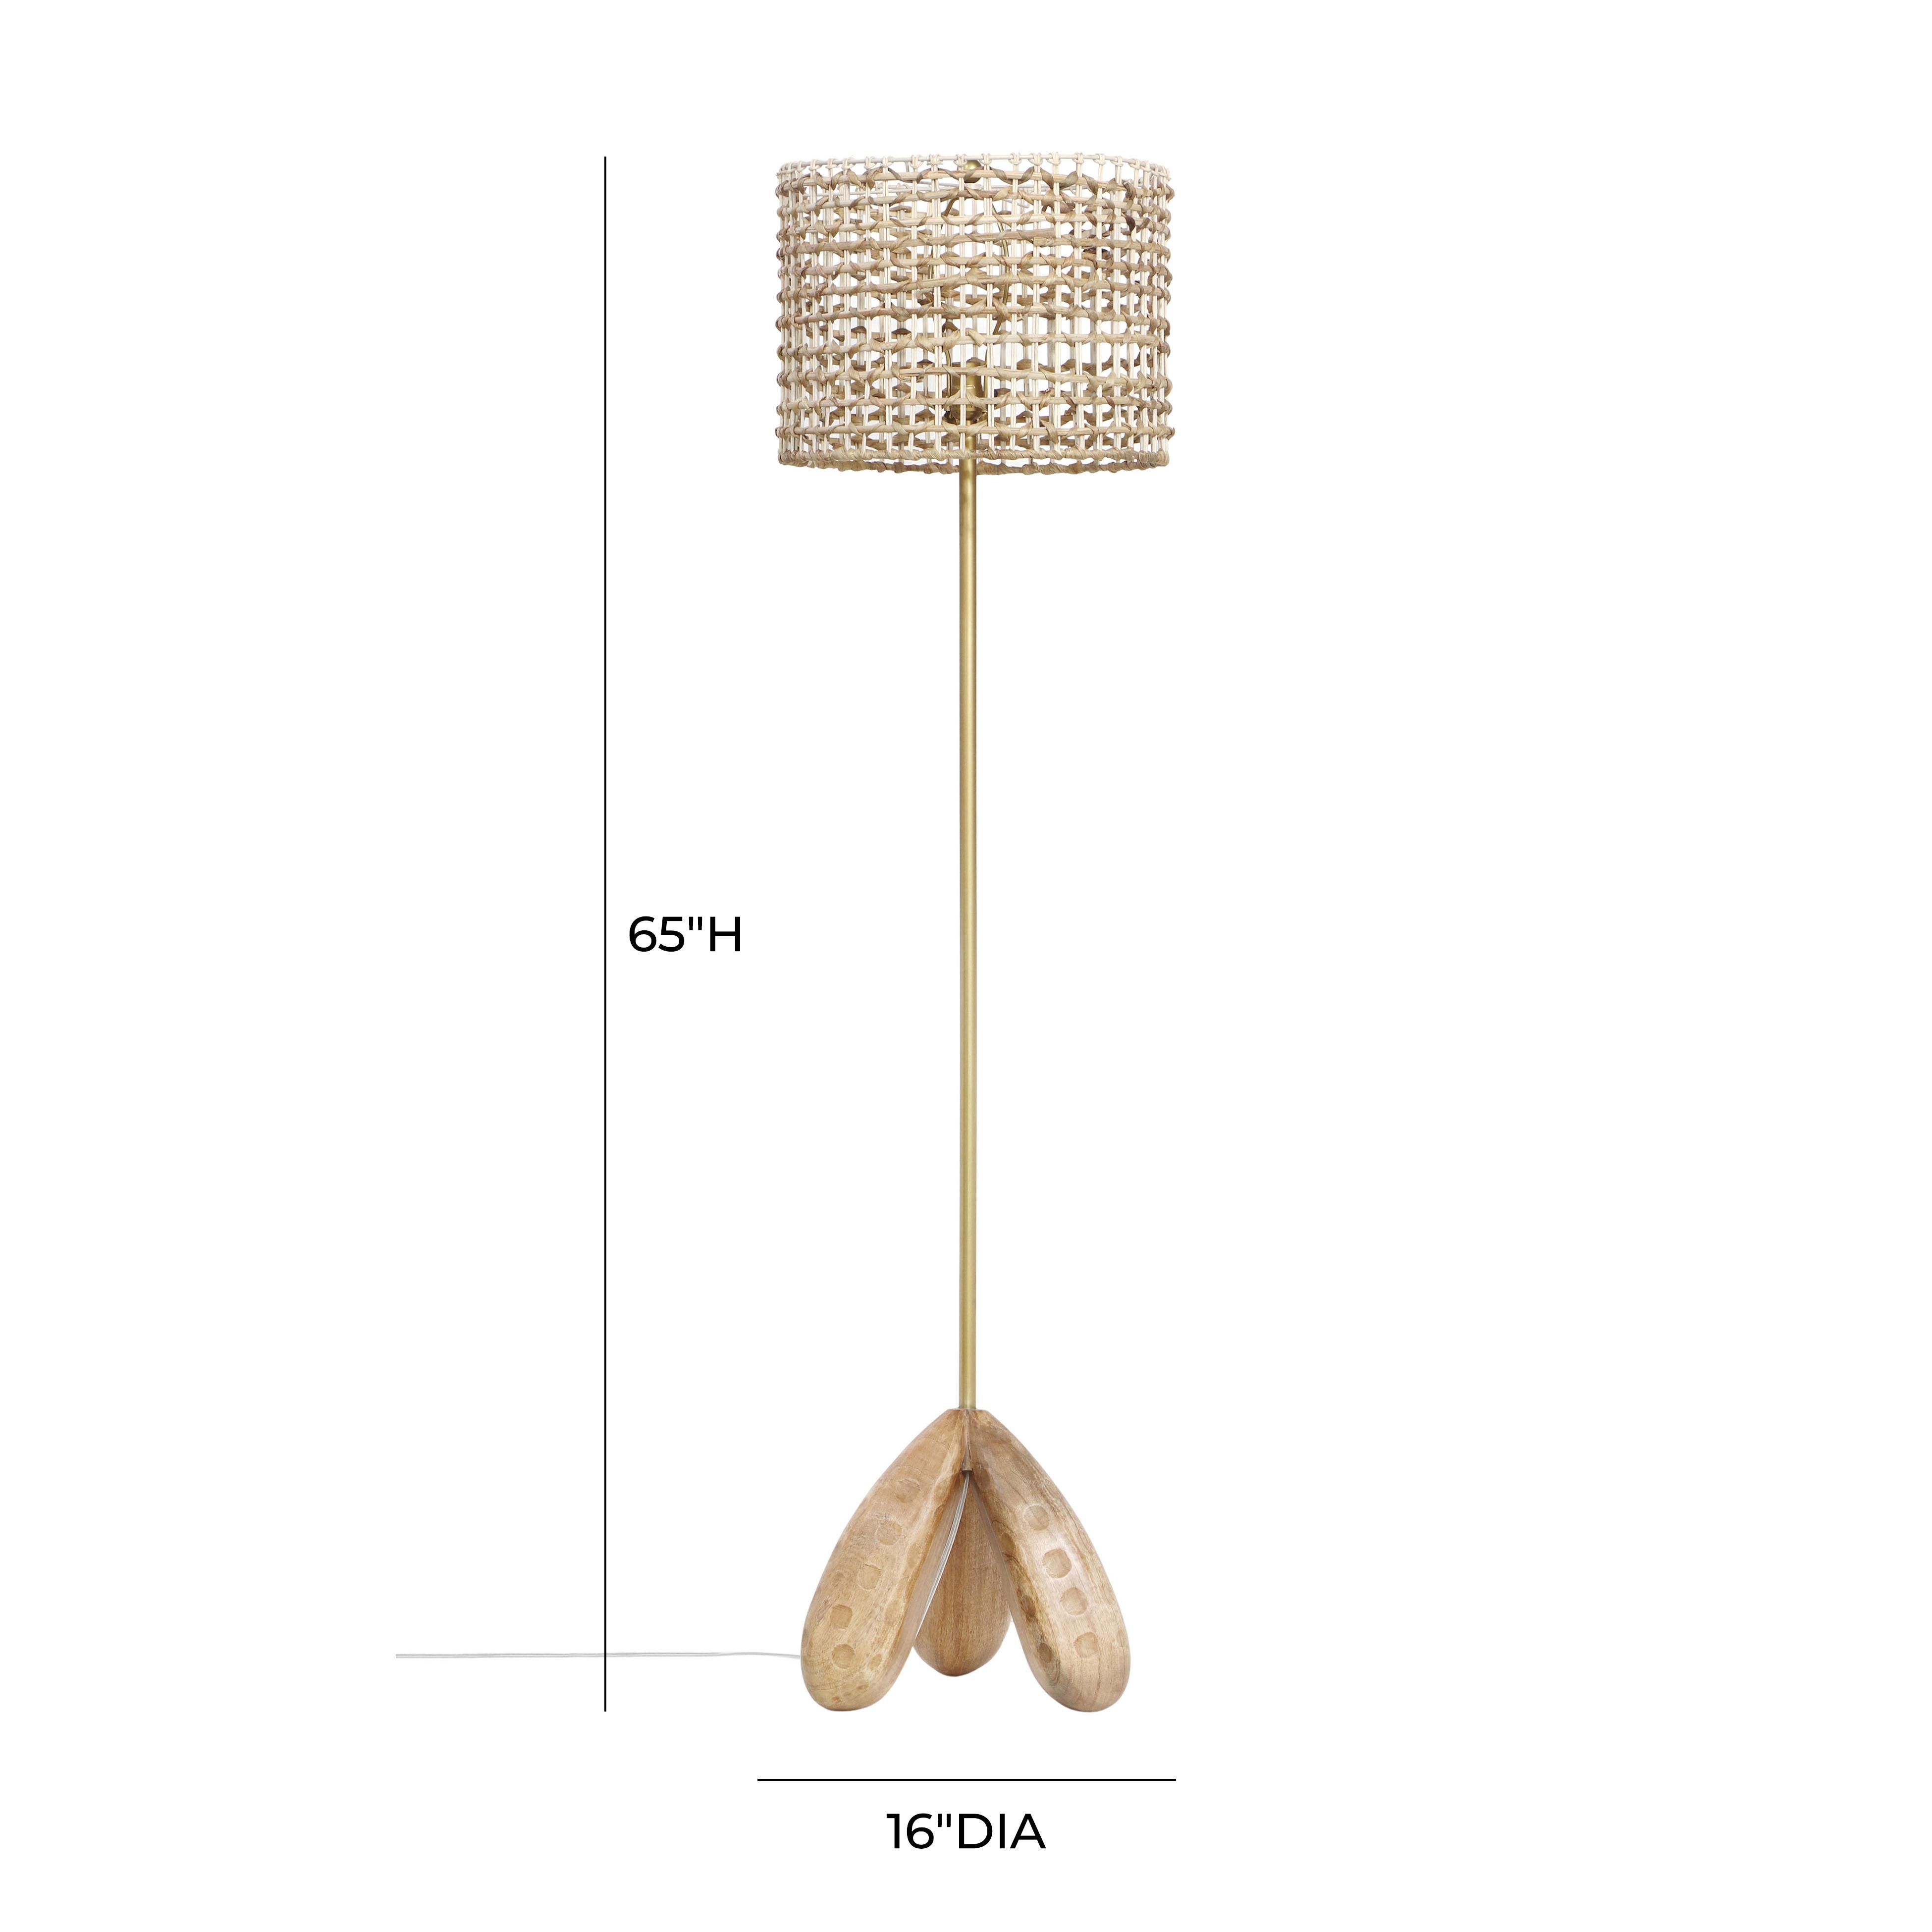 Alondra Wooden Floor Lamp - Image 4